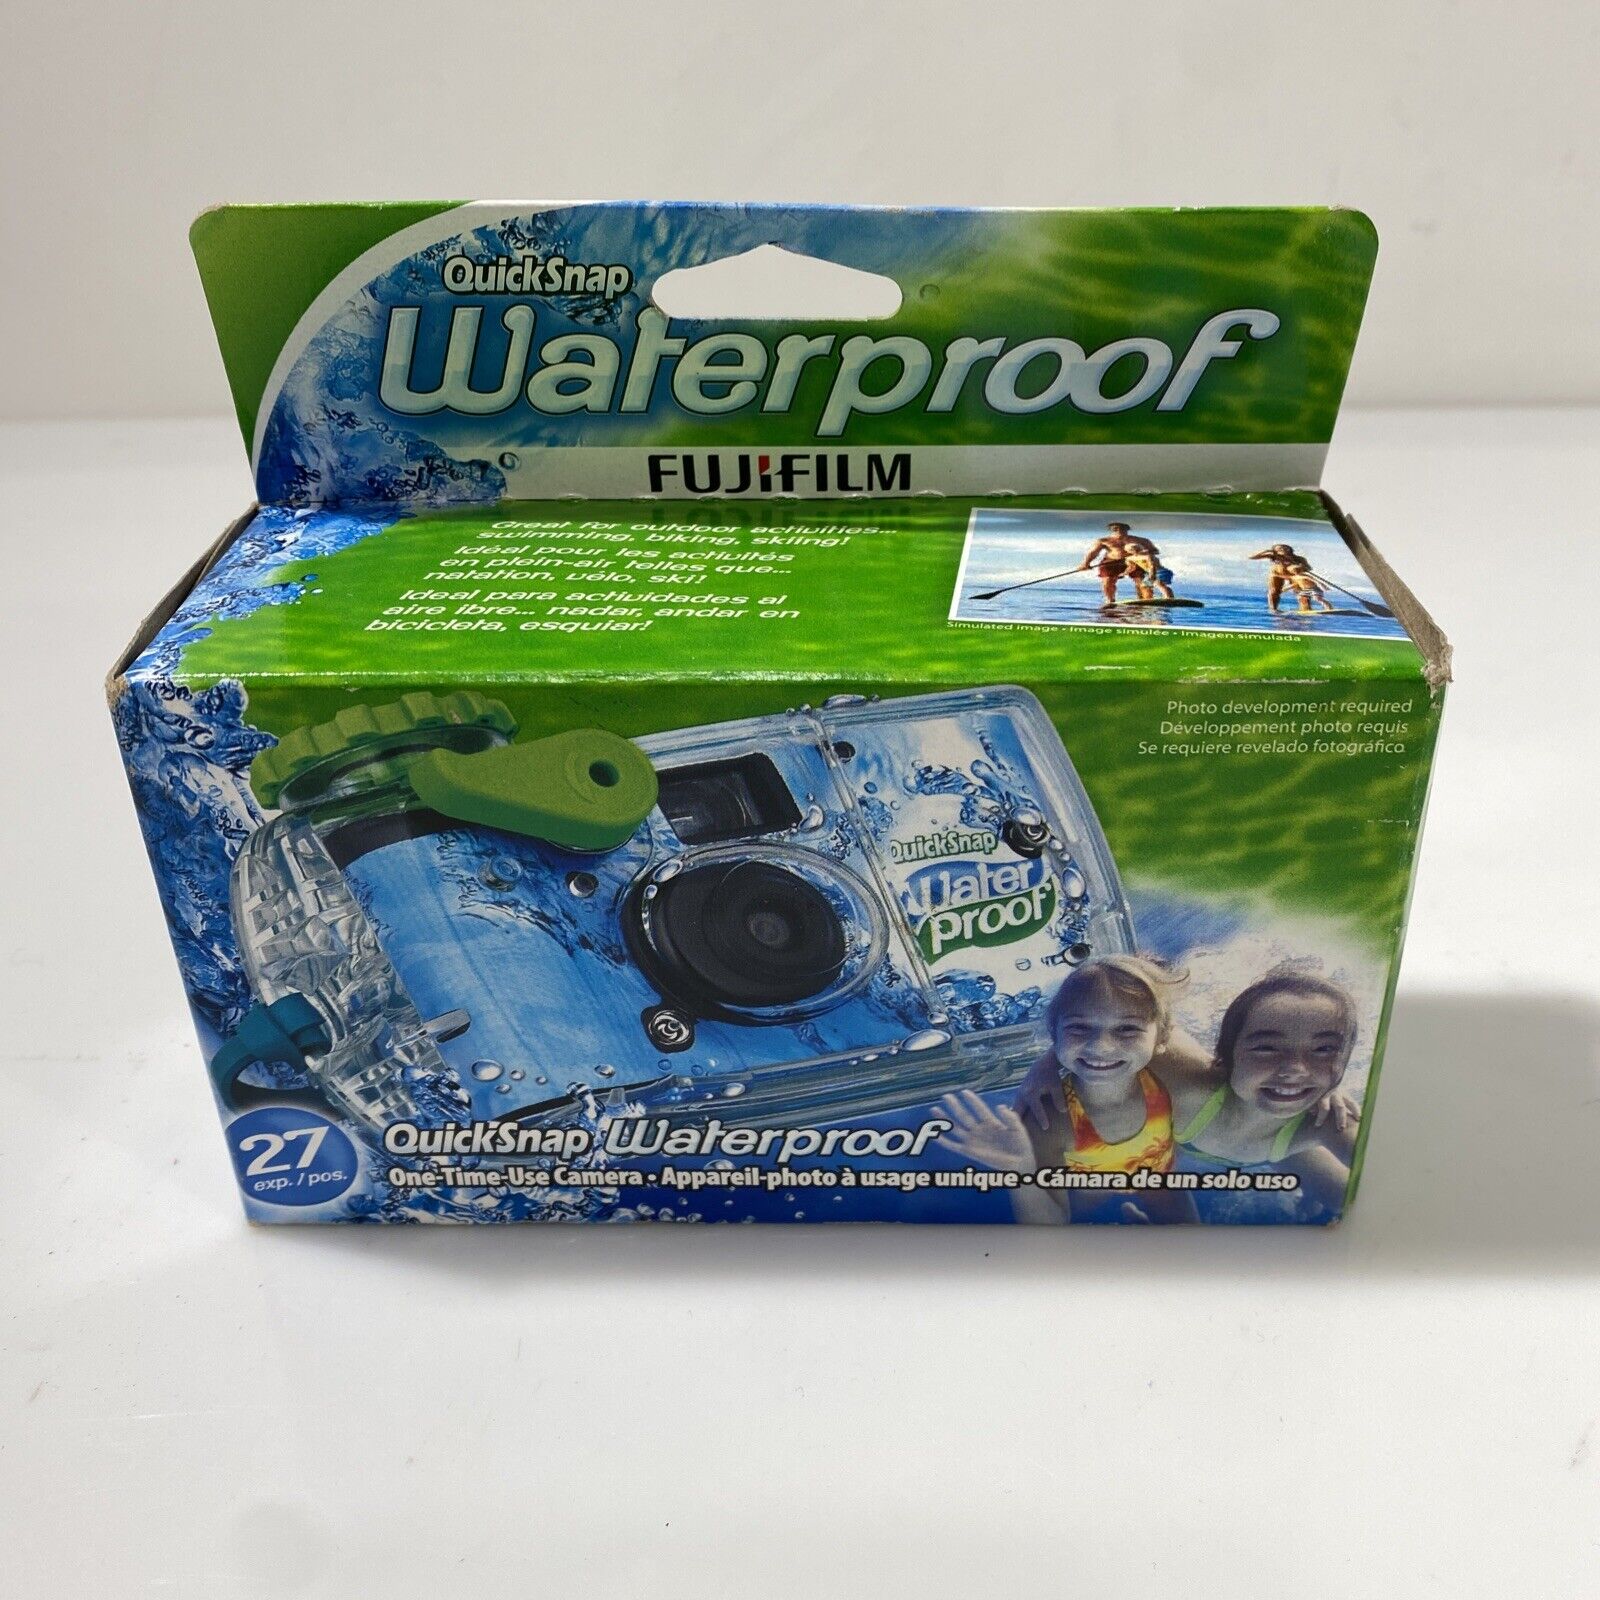 Underwater Camera Waterproof Fuji Quicksnap 27 Exposure Fujifilm